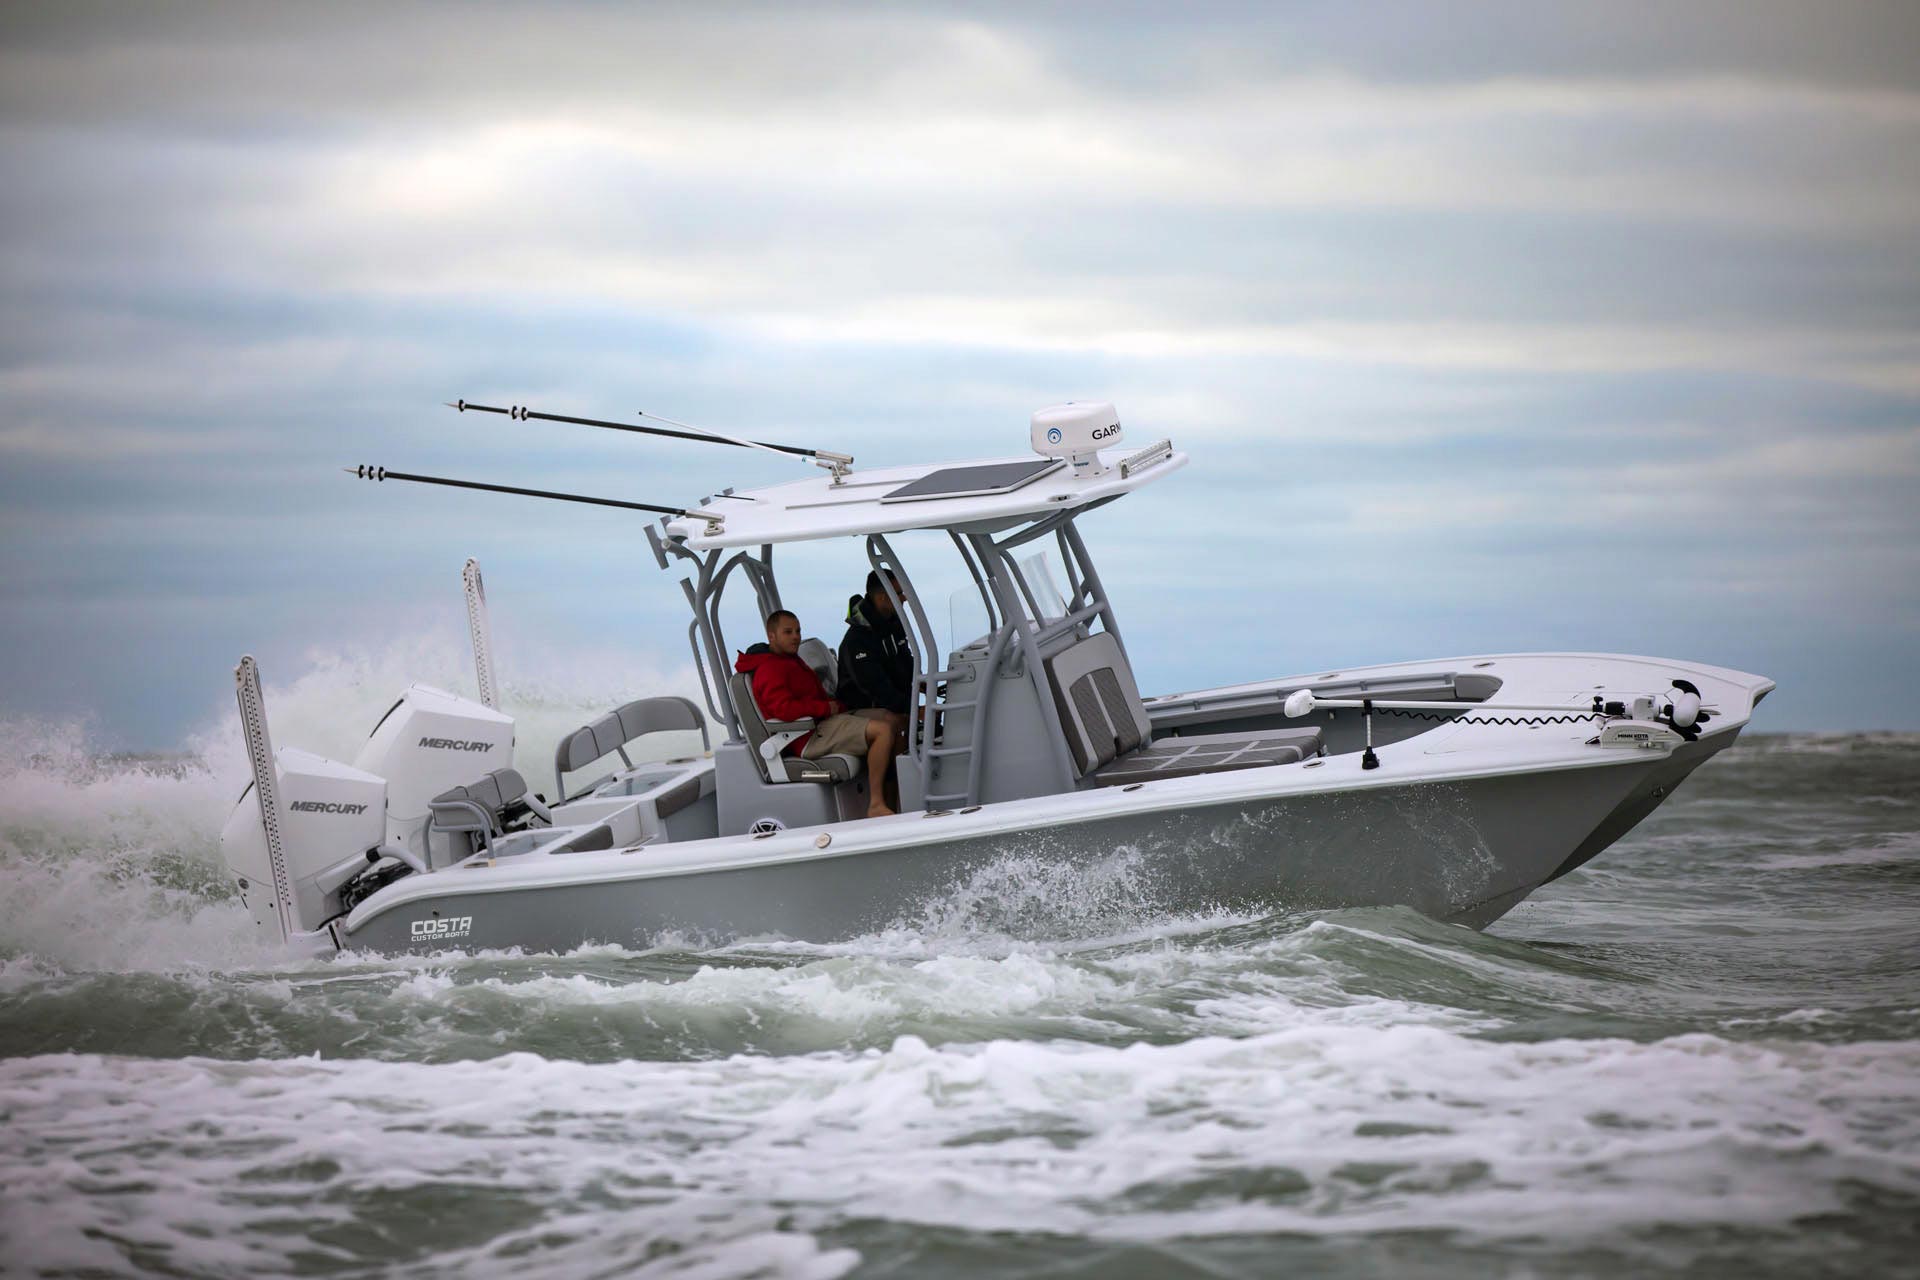 hybrid power catamaran for sale